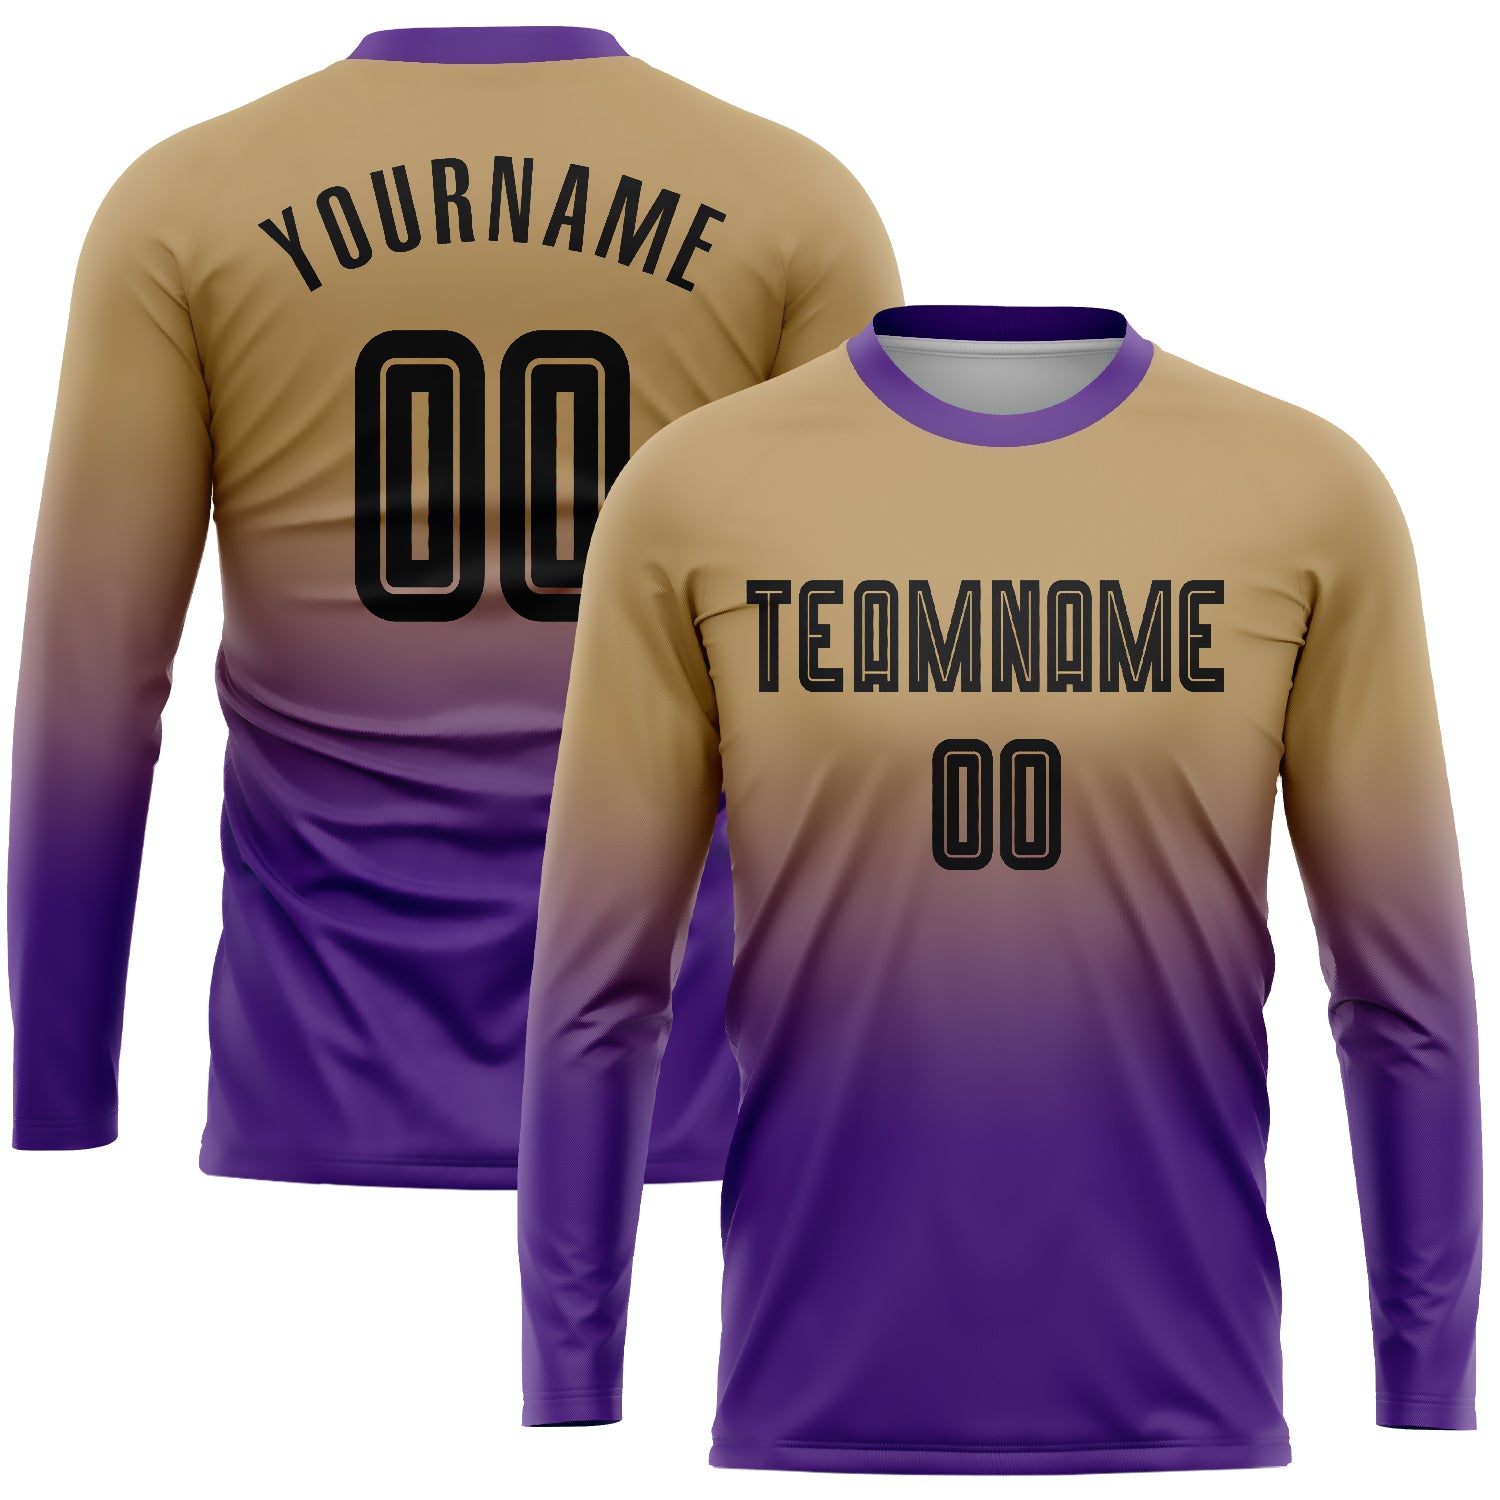 Custom Purple Gold-Black Sublimation Fade Fashion Soccer Uniform